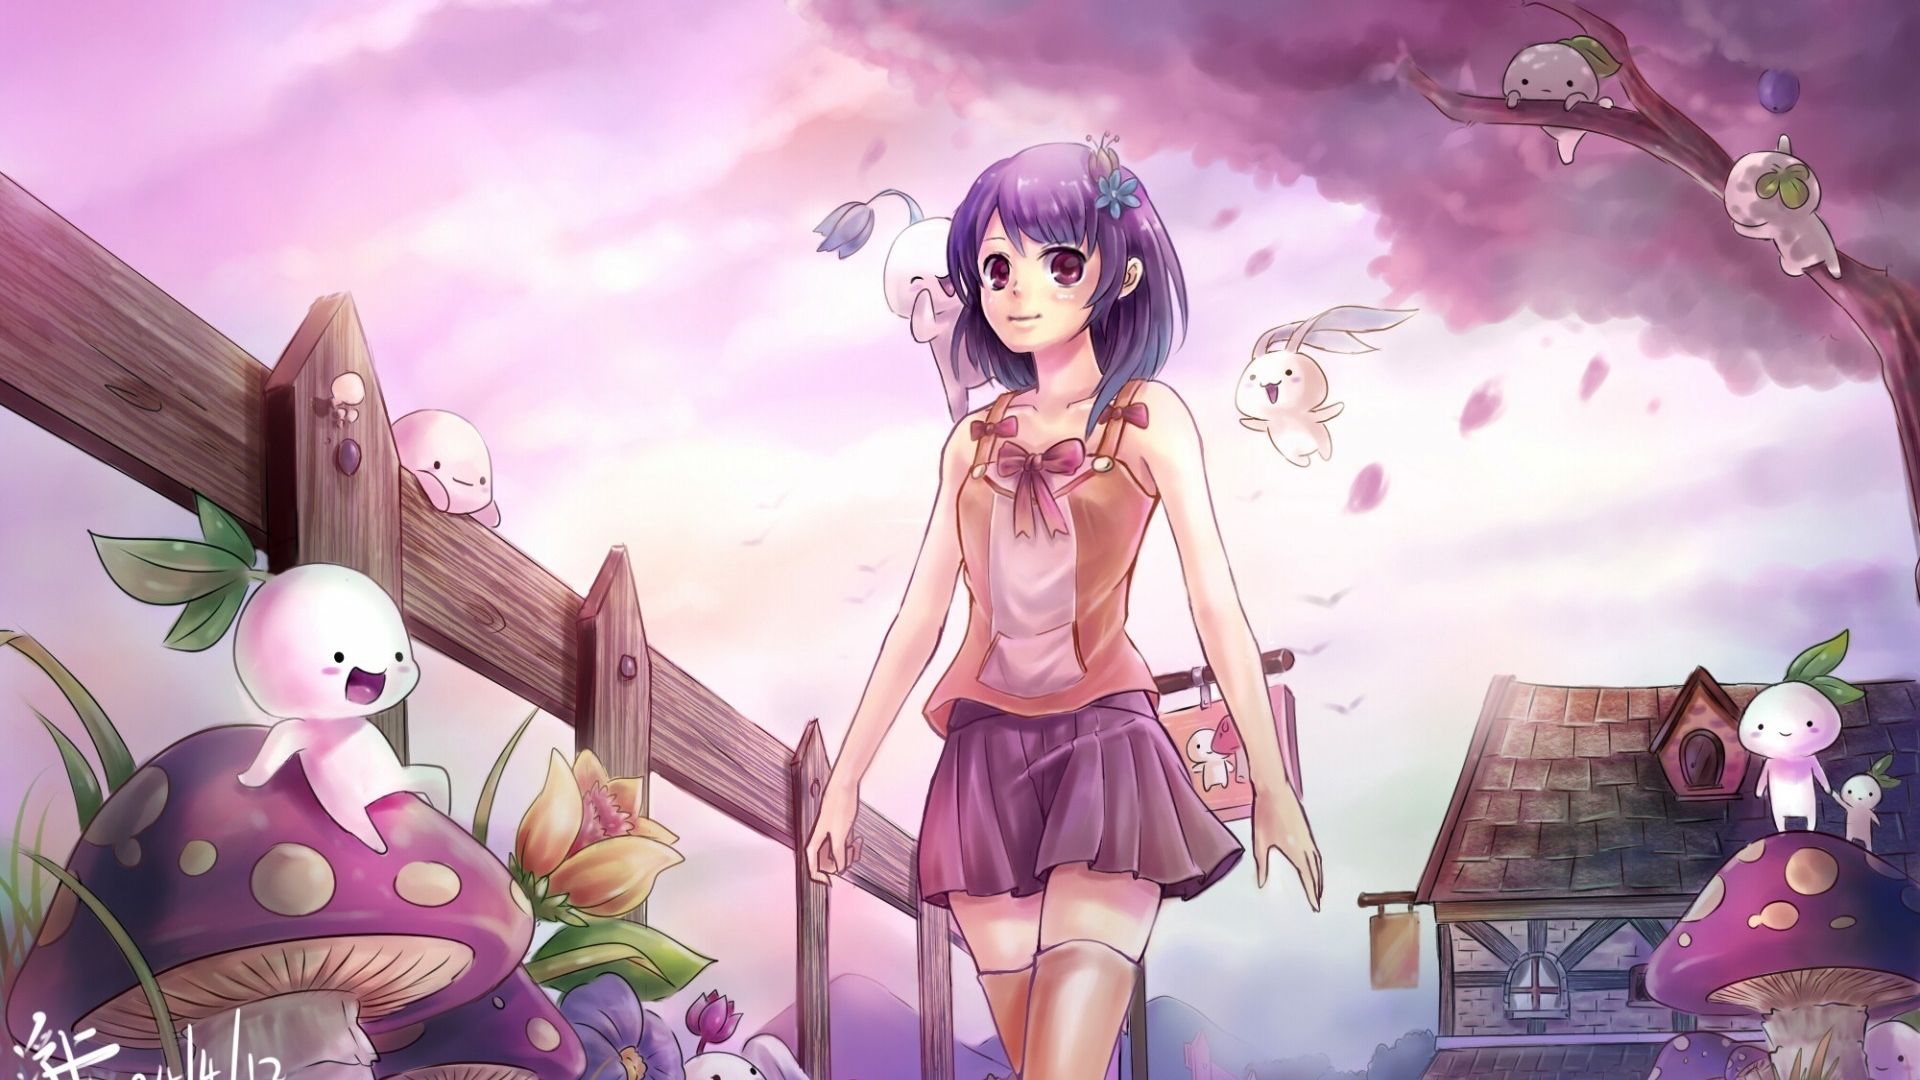 Free download manga anime cute purple girl bunny mushrooms HD wallpaper [1920x1200] for your Desktop, Mobile & Tablet. Explore Cute Anime Wallpaper. HD Anime Wallpaper, Anime Desktop Wallpaper, Anime Girl Wallpaper